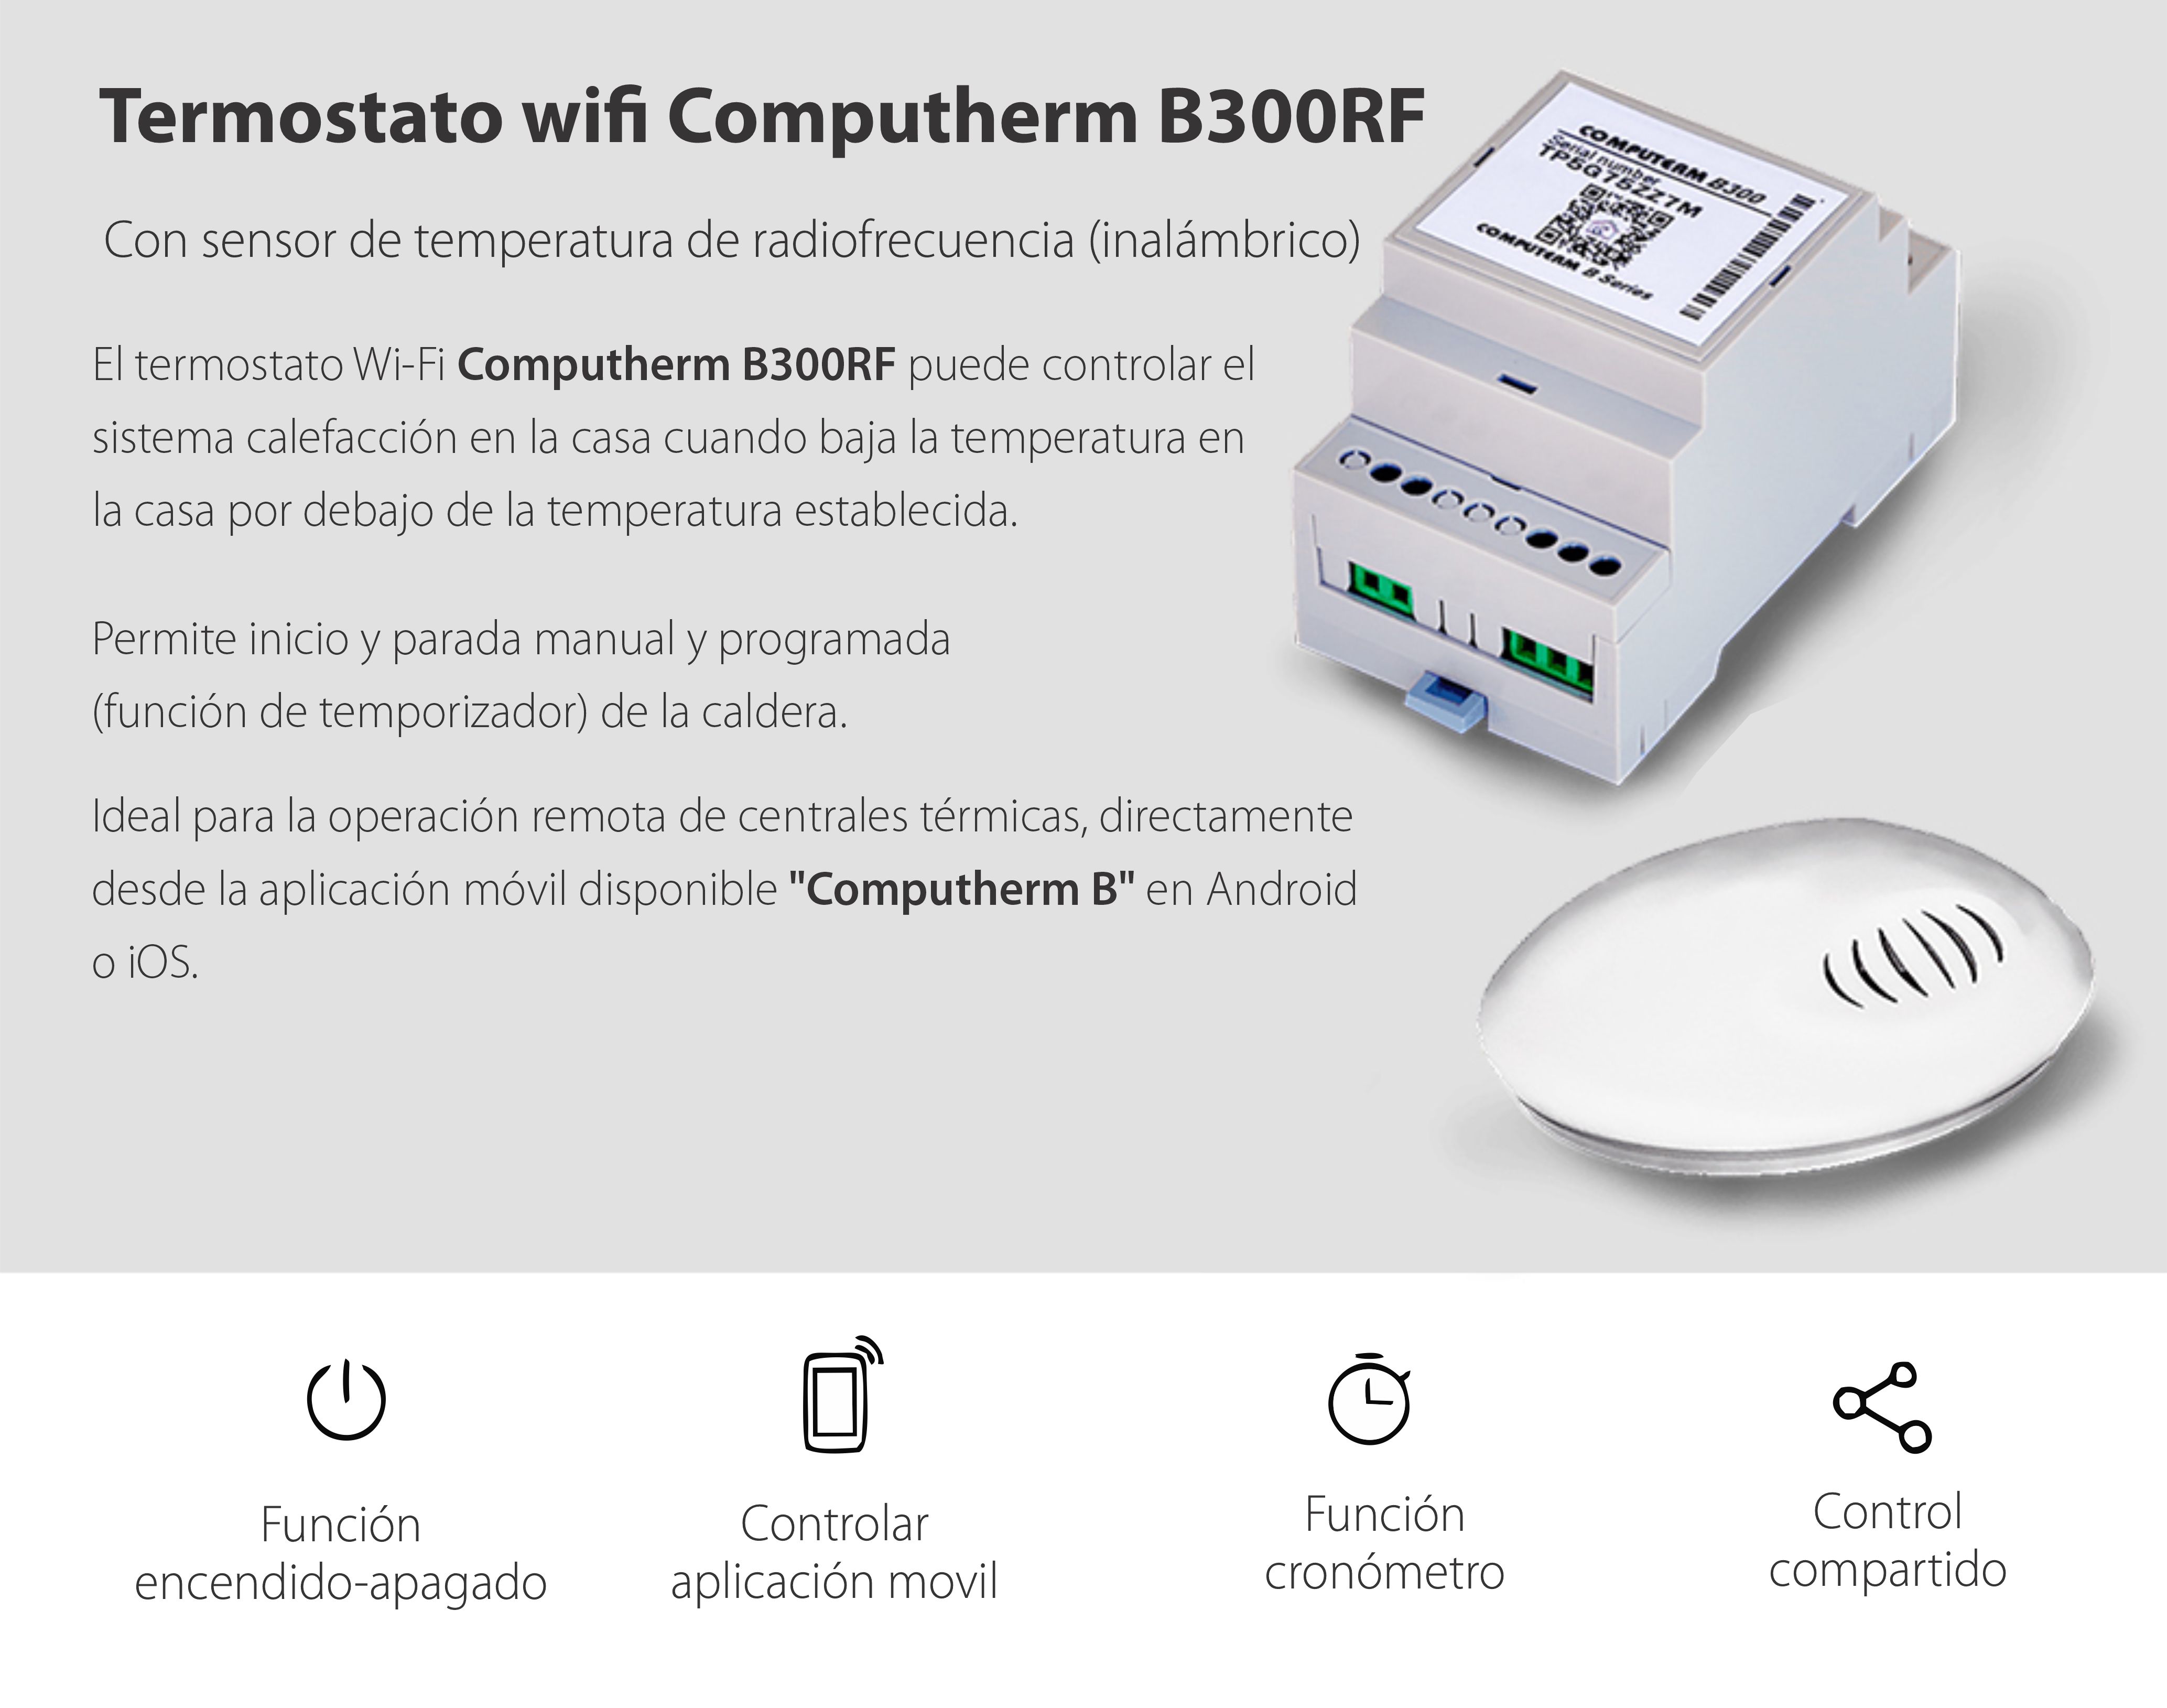 Termostato COMPUTHERM B300RF wifi con sensor de temperatura inalámbrico, temporizador, control desde el teléfono móvil, distribución control de acceso